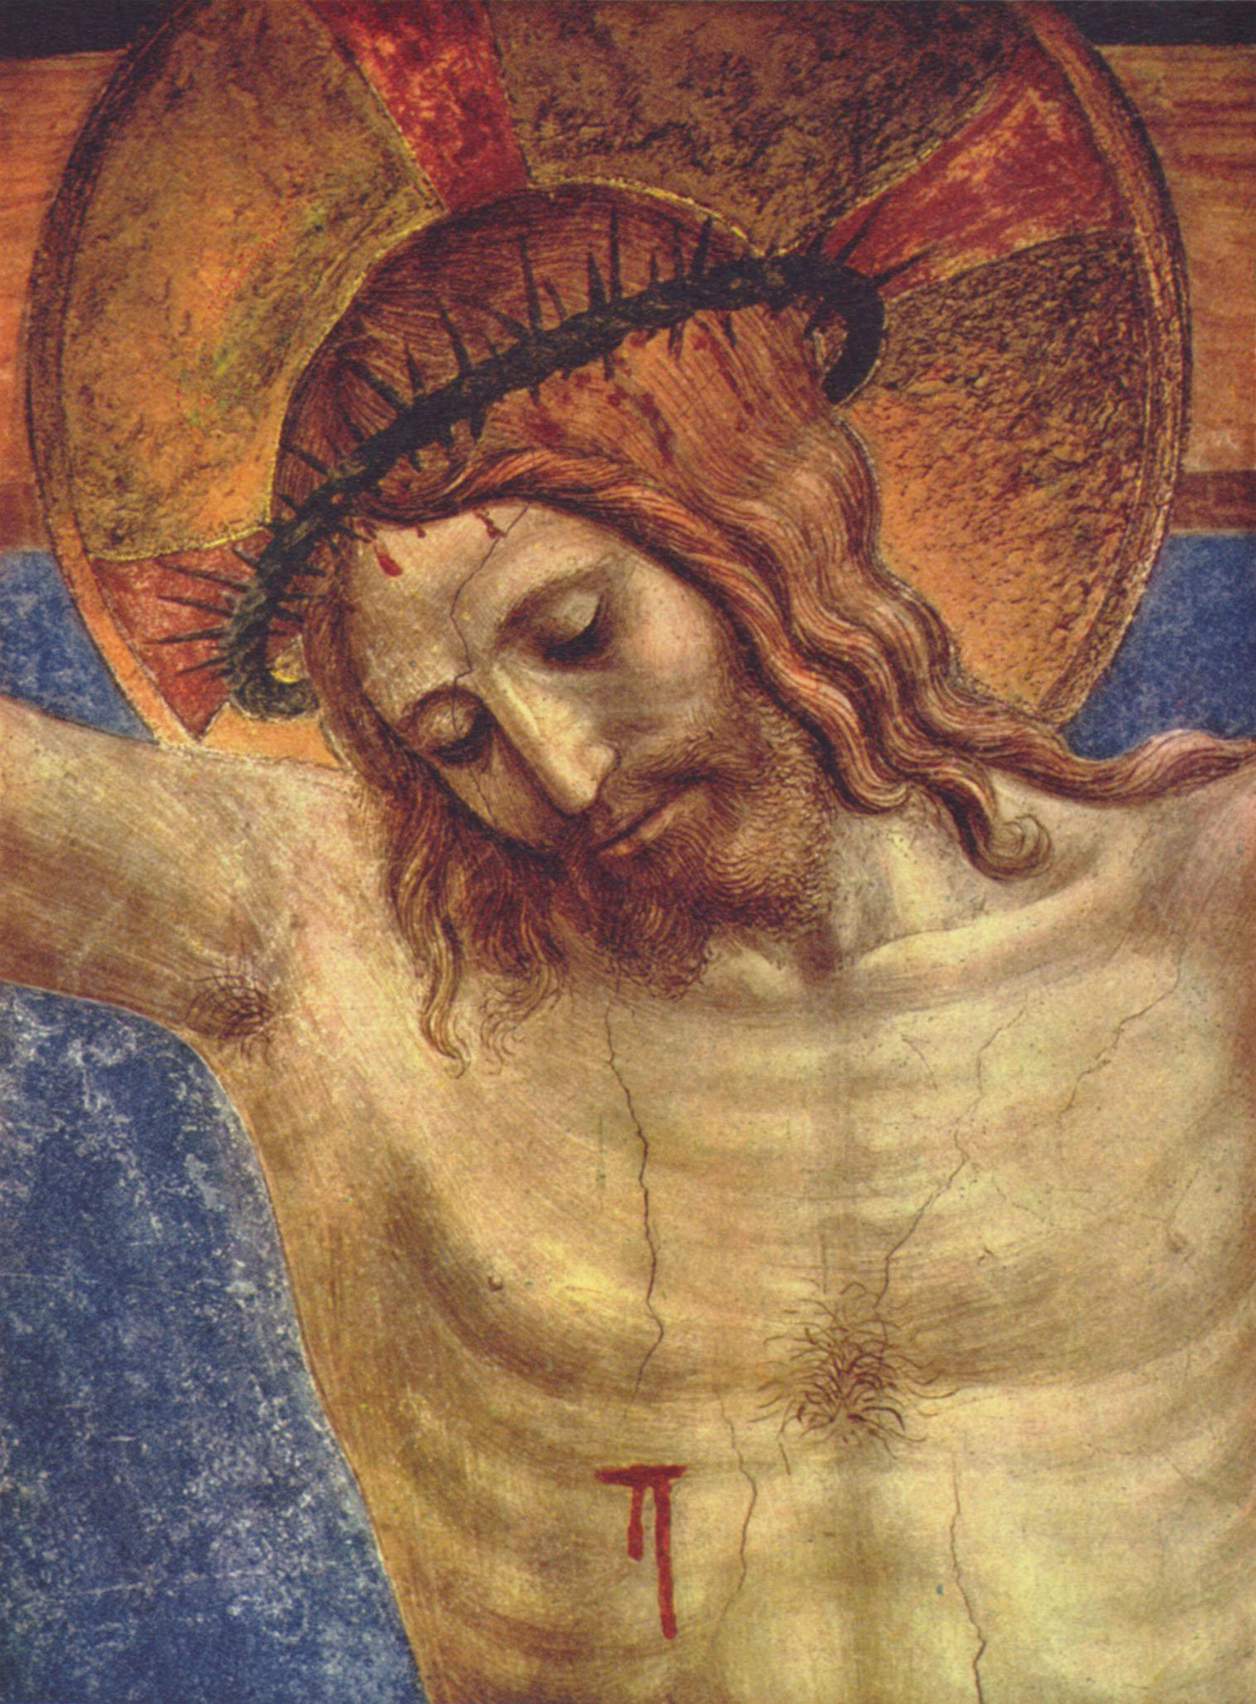 Fra Angelico (circa 1395–1455) [Public domain], via Wikimedia Commons